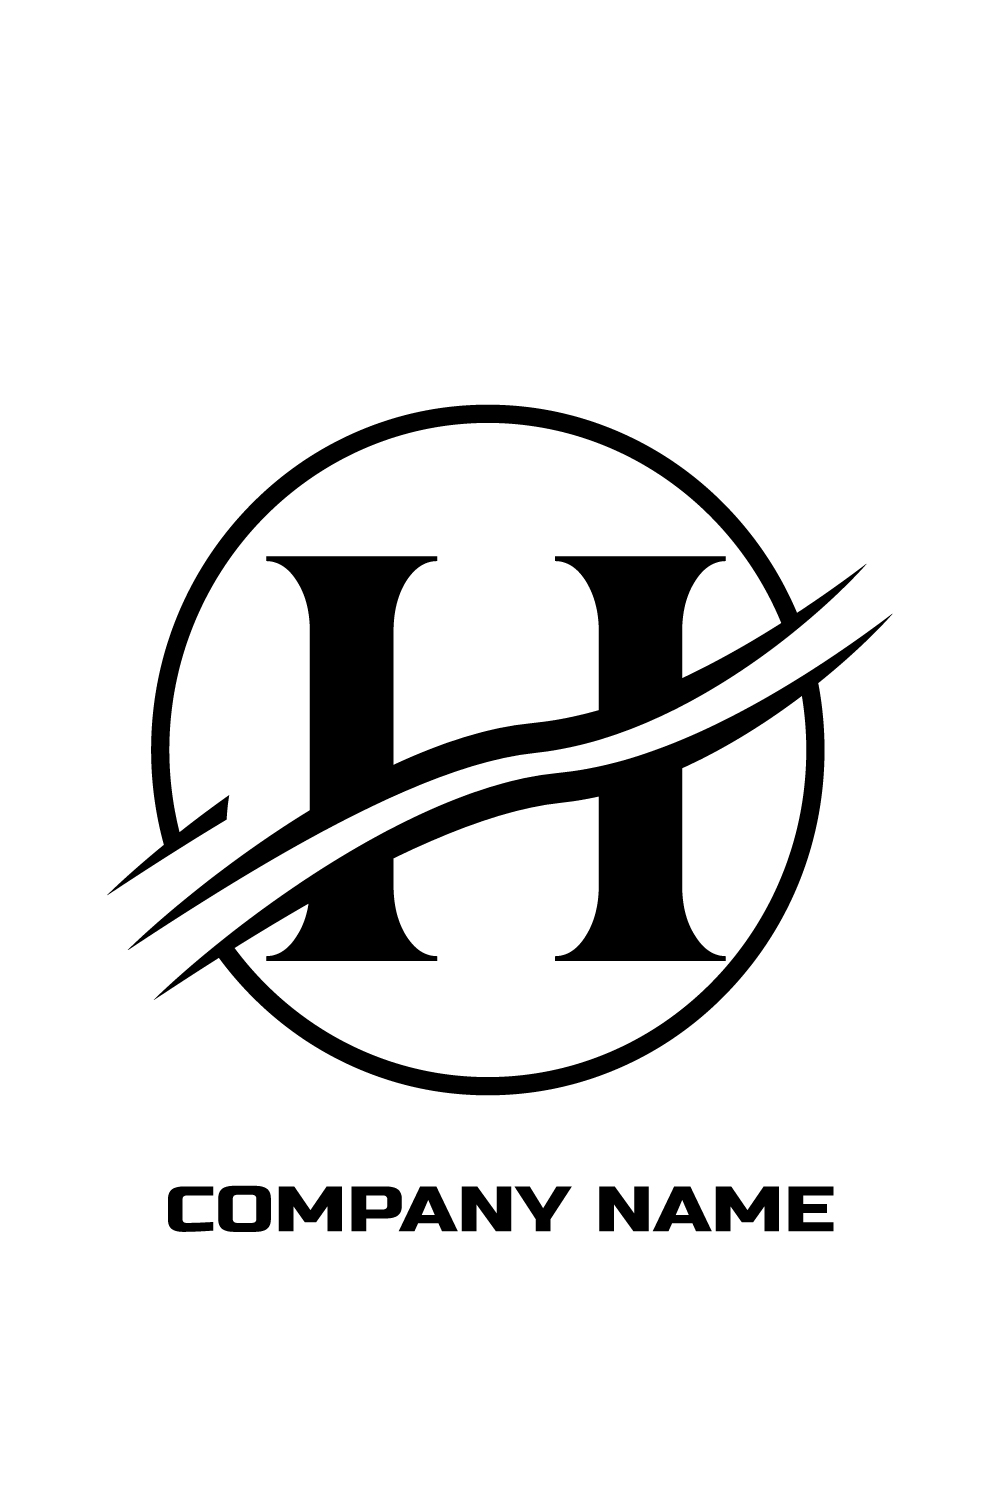 H logo pinterest preview image.